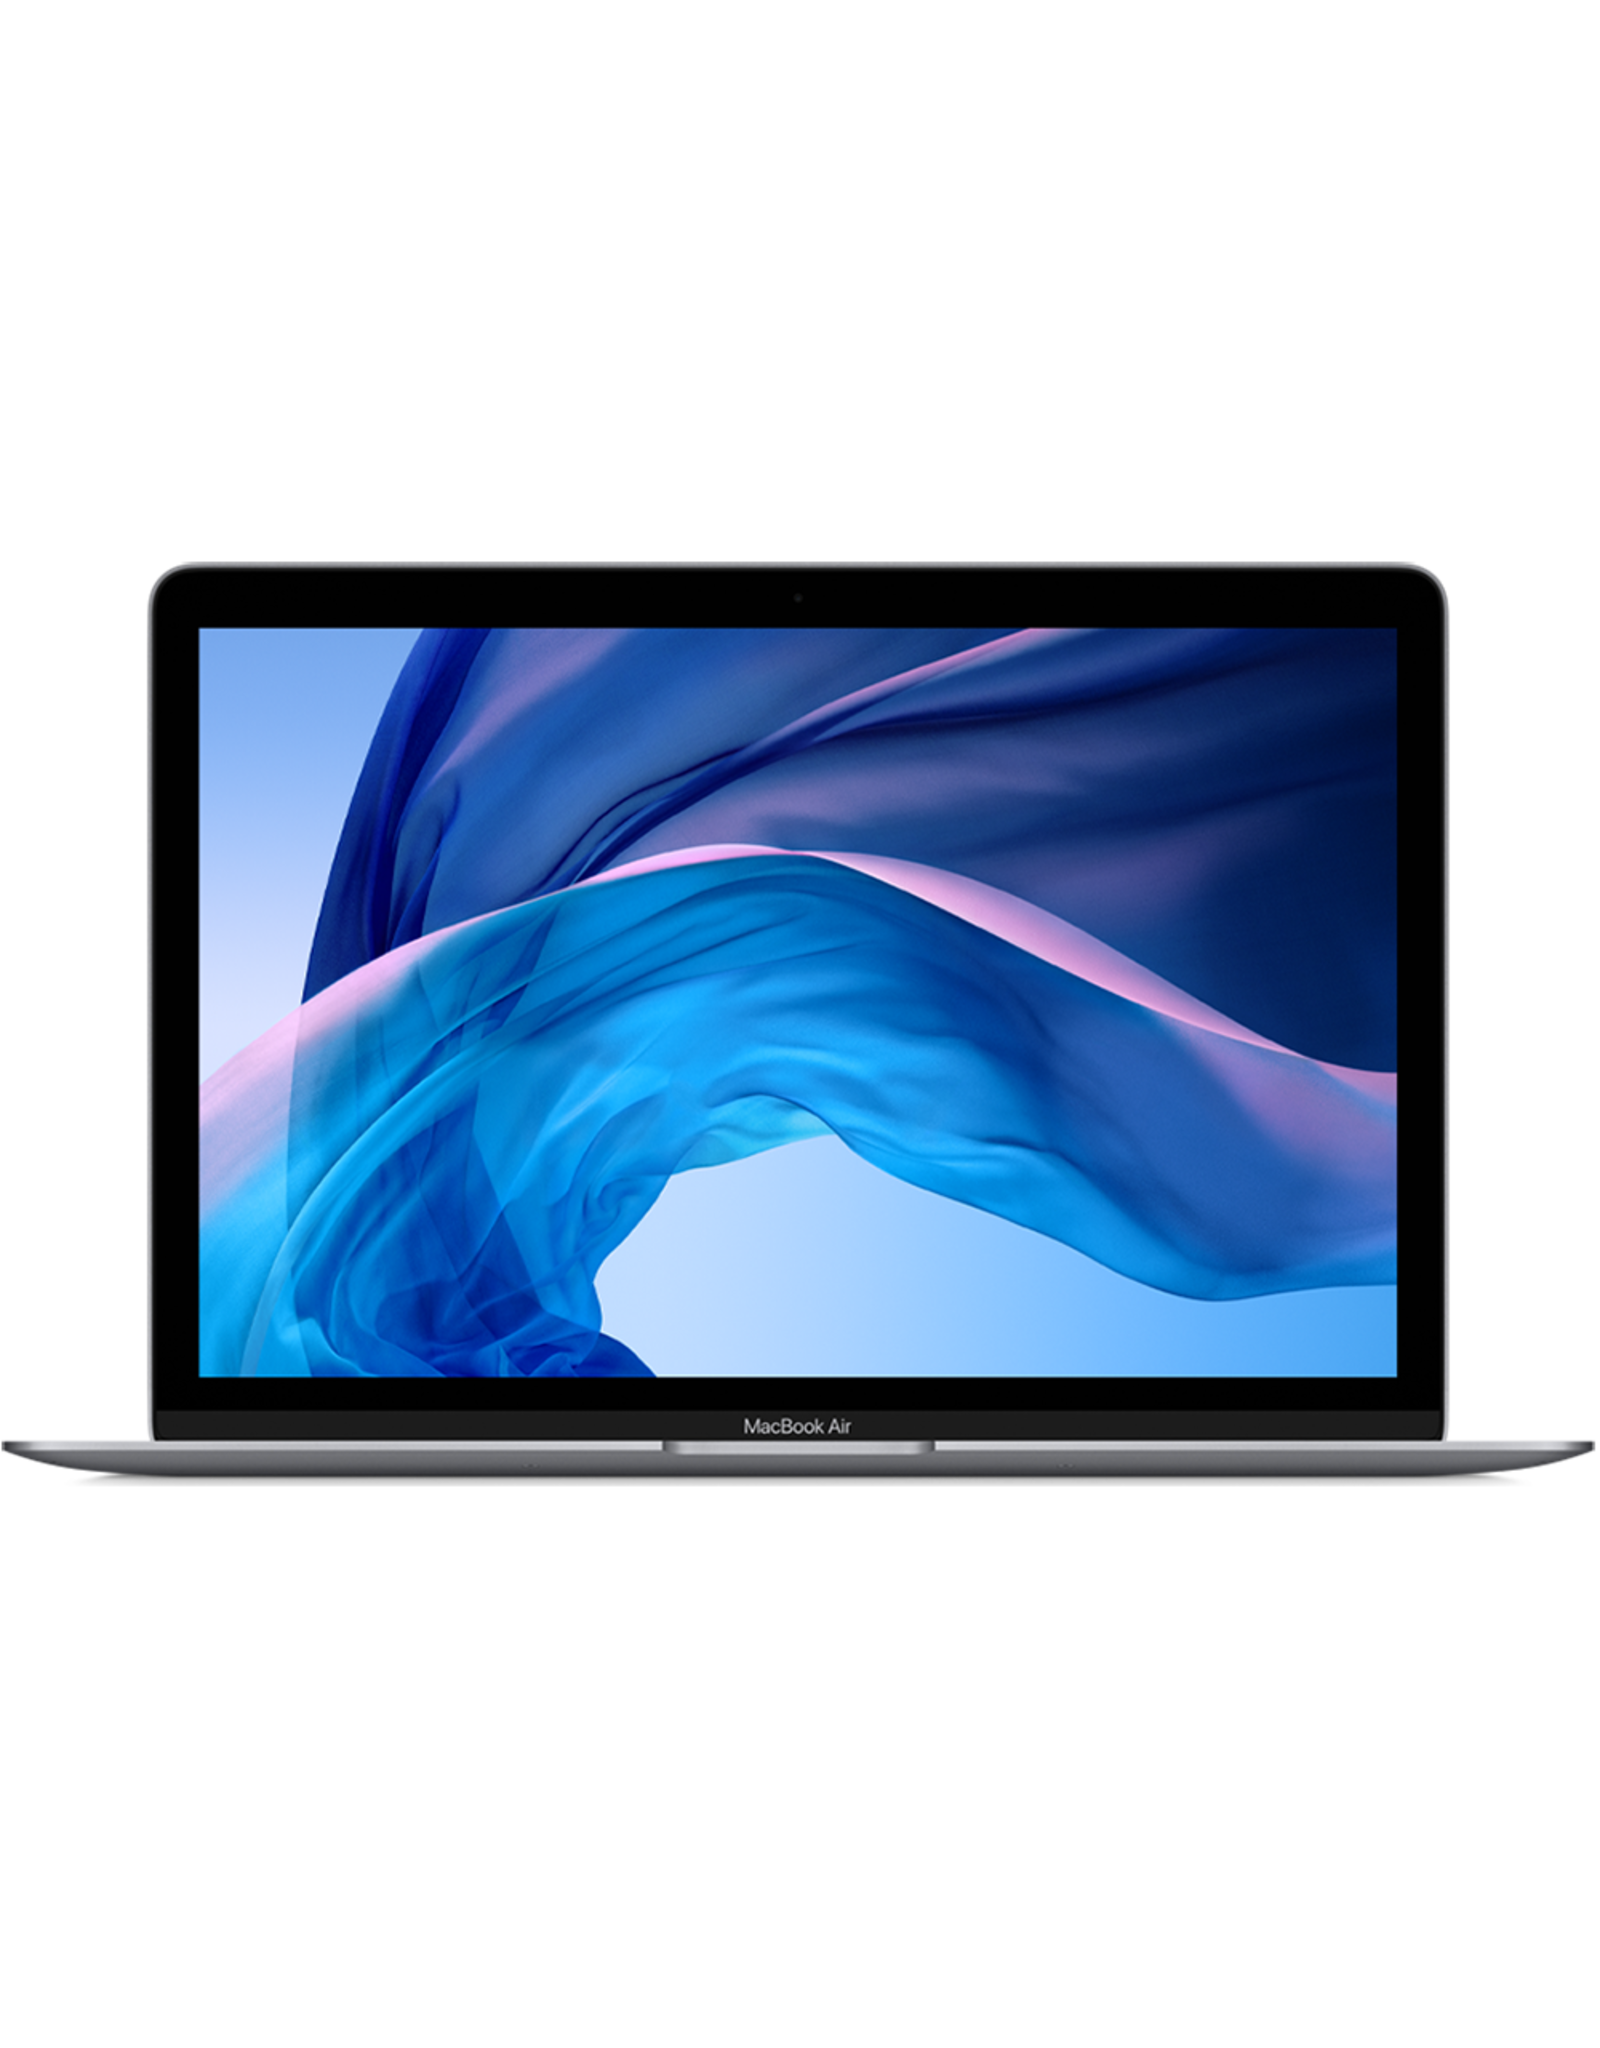 Apple (2020) 13-inch MacBook Air: Intel